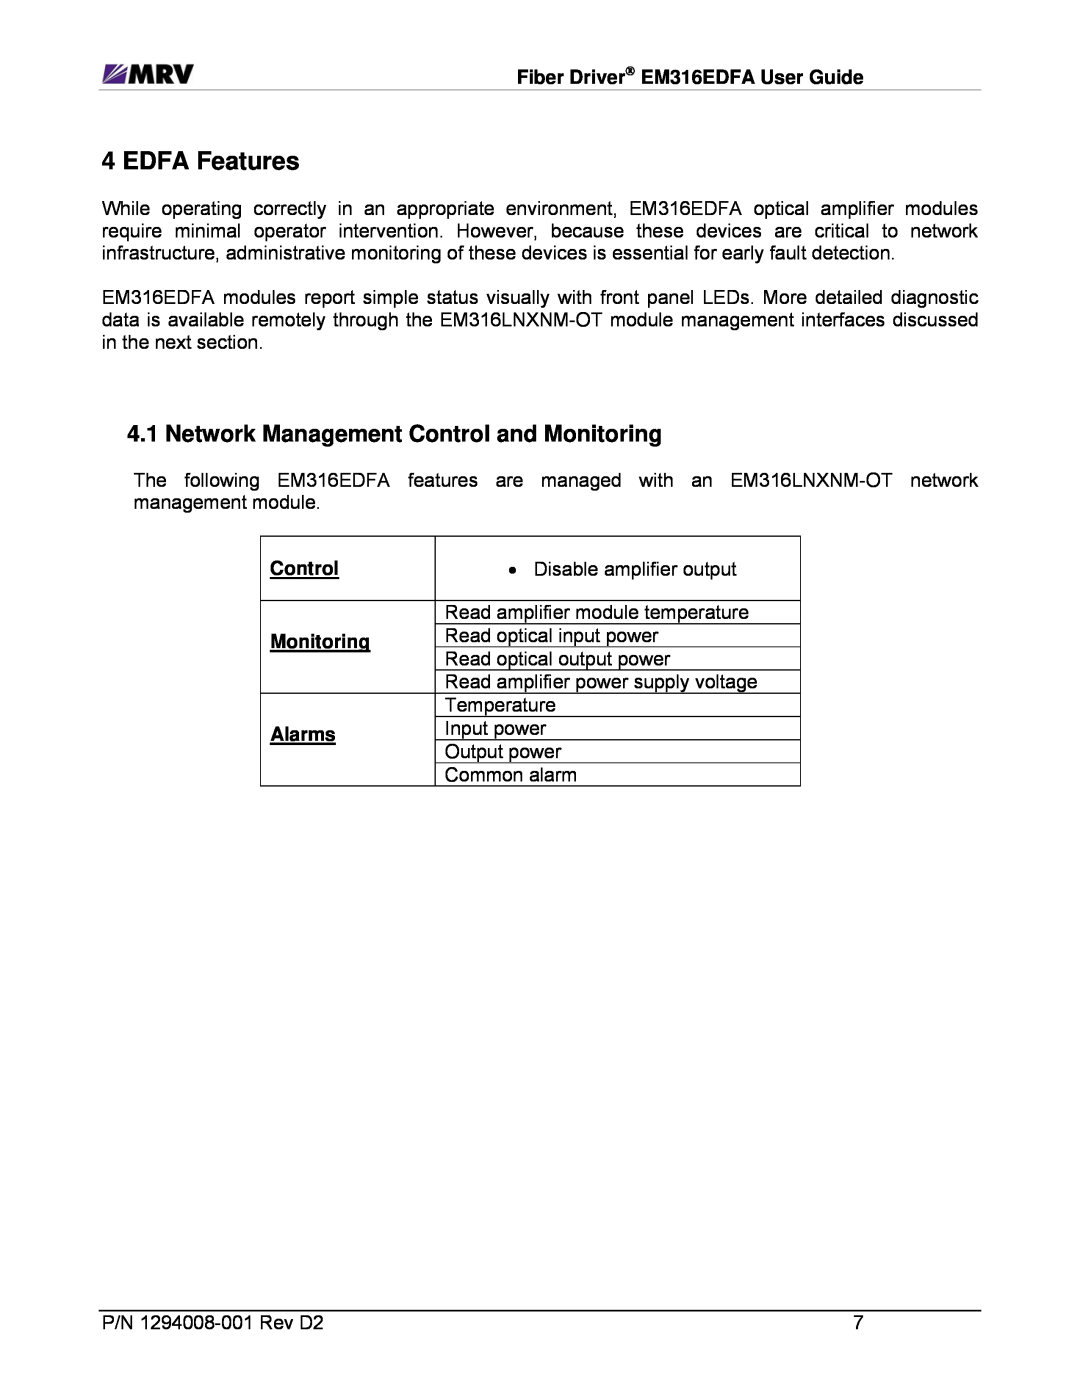 MRV Communications EM316EDFA-BR, EM316EDFA-LPR manual EDFA Features, Network Management Control and Monitoring 